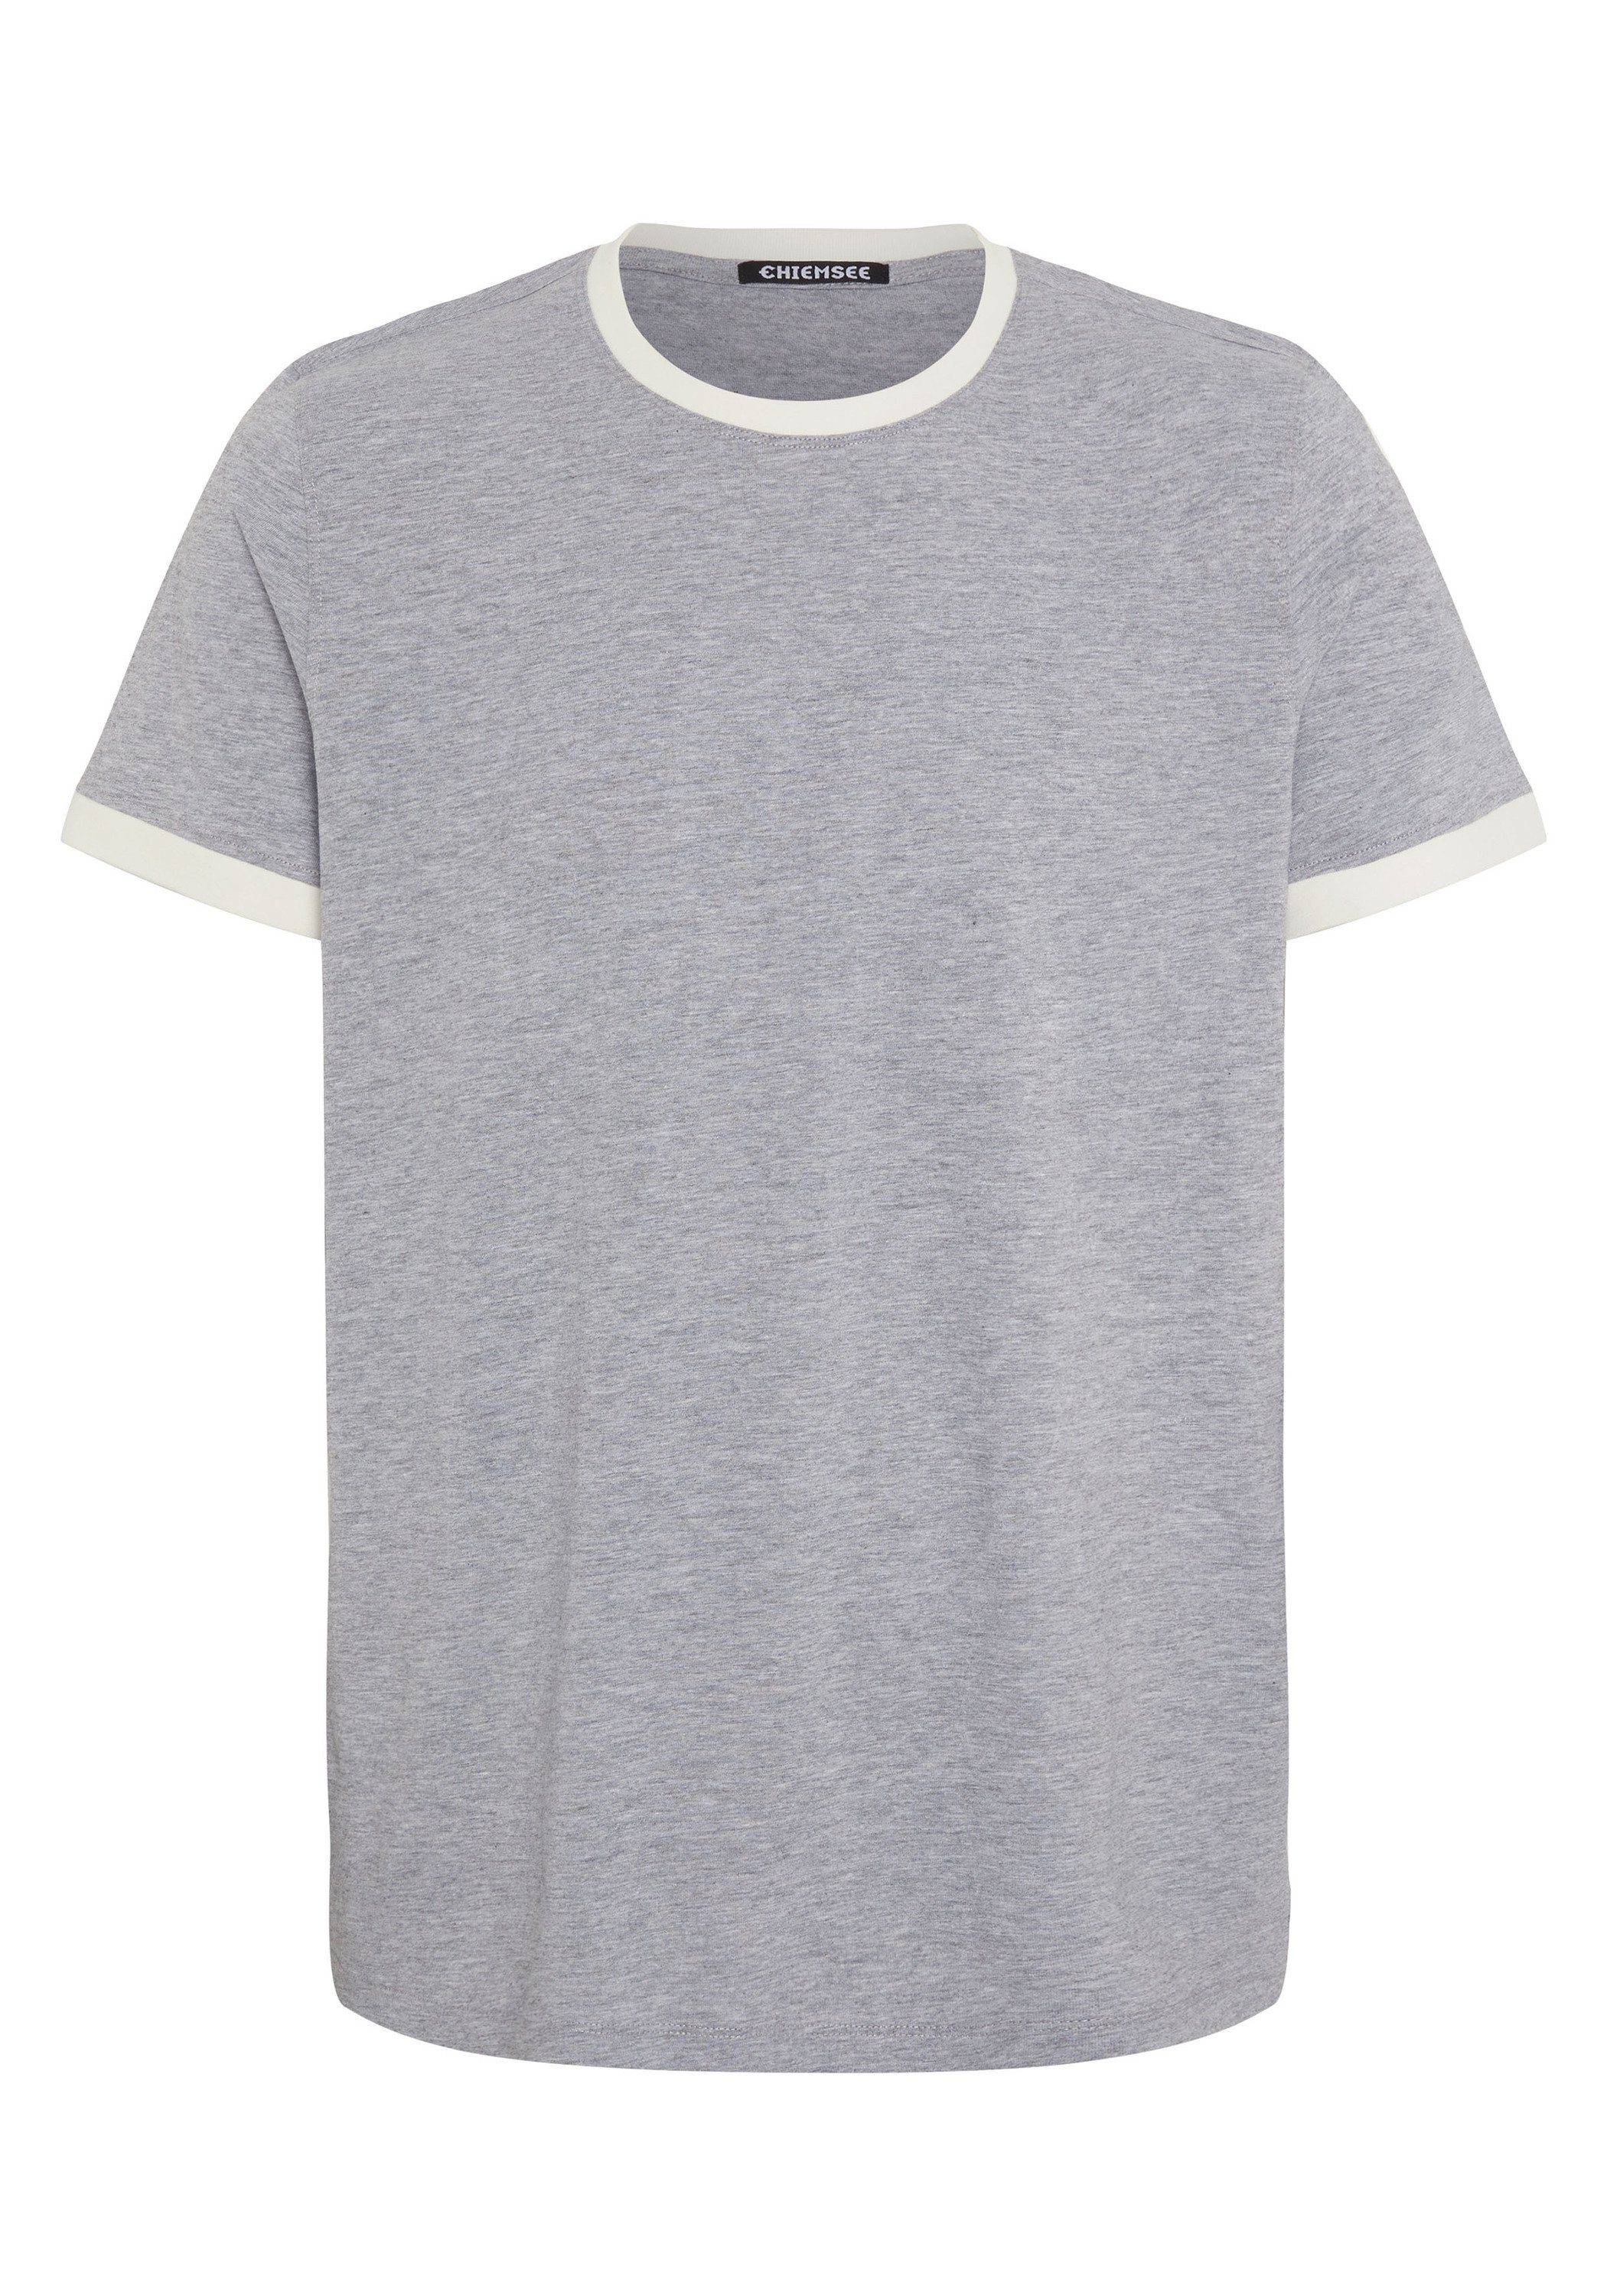 Chiemsee Print-Shirt Shirt aus Jersey mit Label-Print 1 17-4402M Neutral Gray Melange